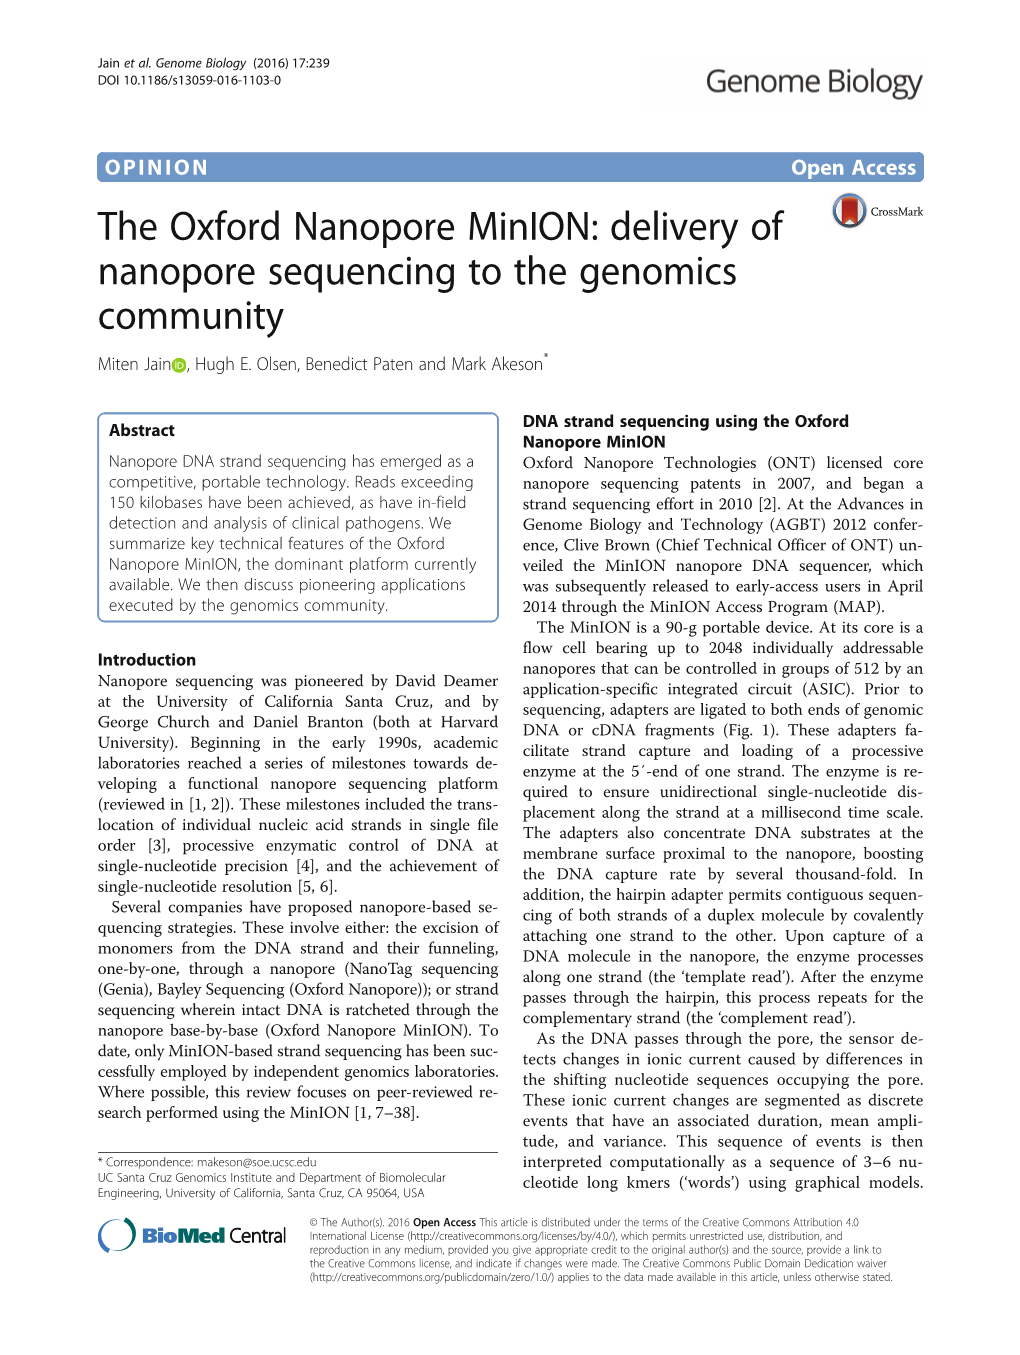 Delivery of Nanopore Sequencing to the Genomics Community Miten Jain , Hugh E